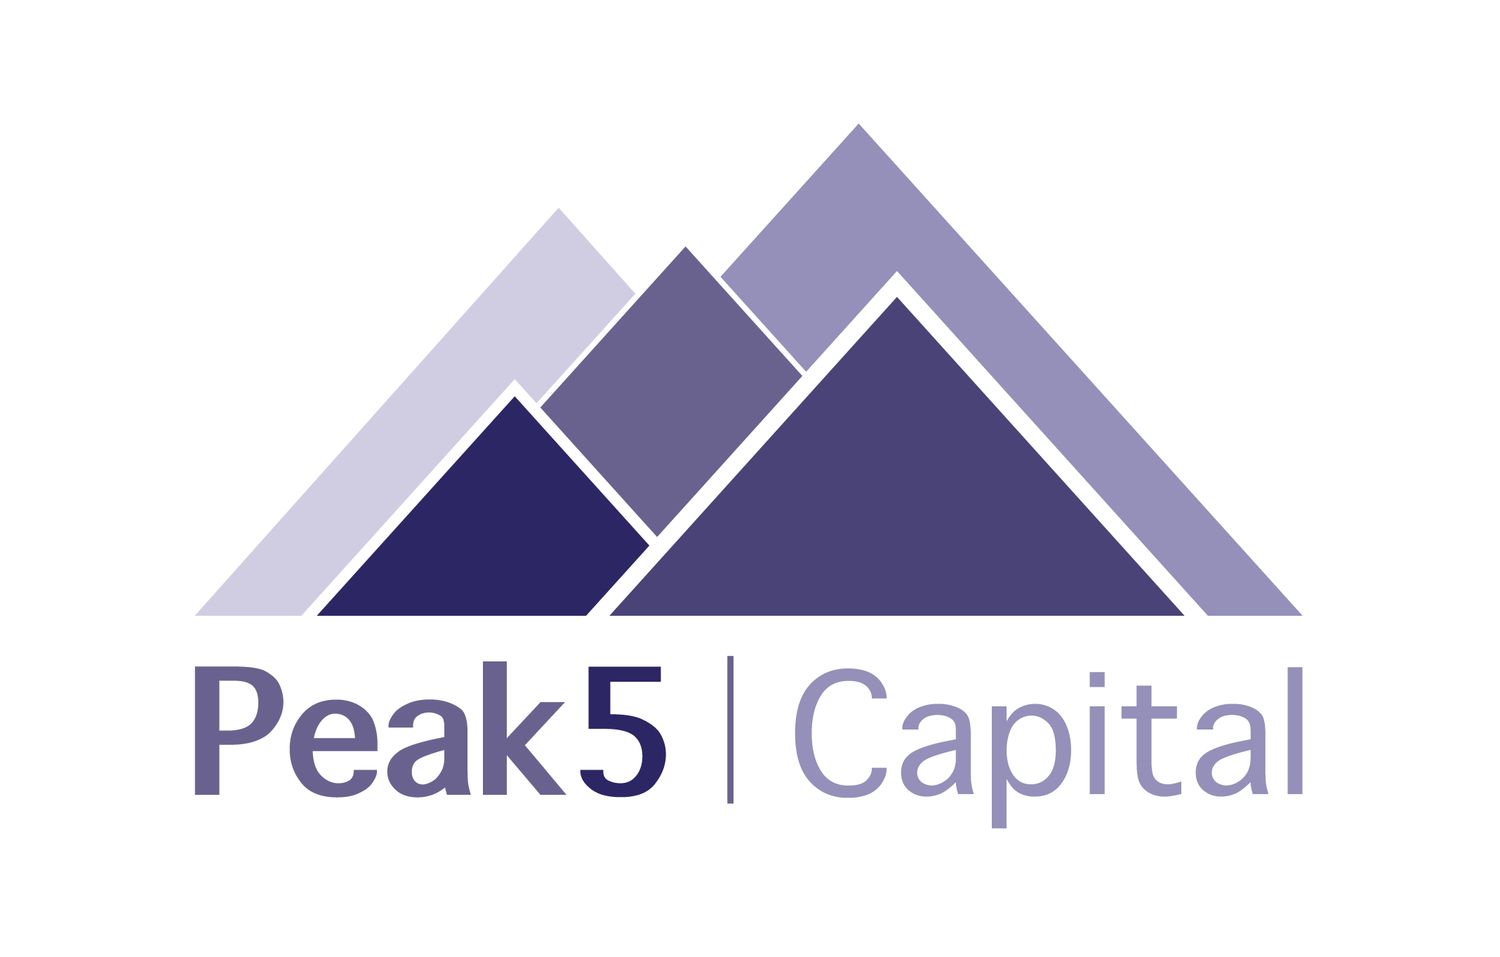 Peak 5 Capital